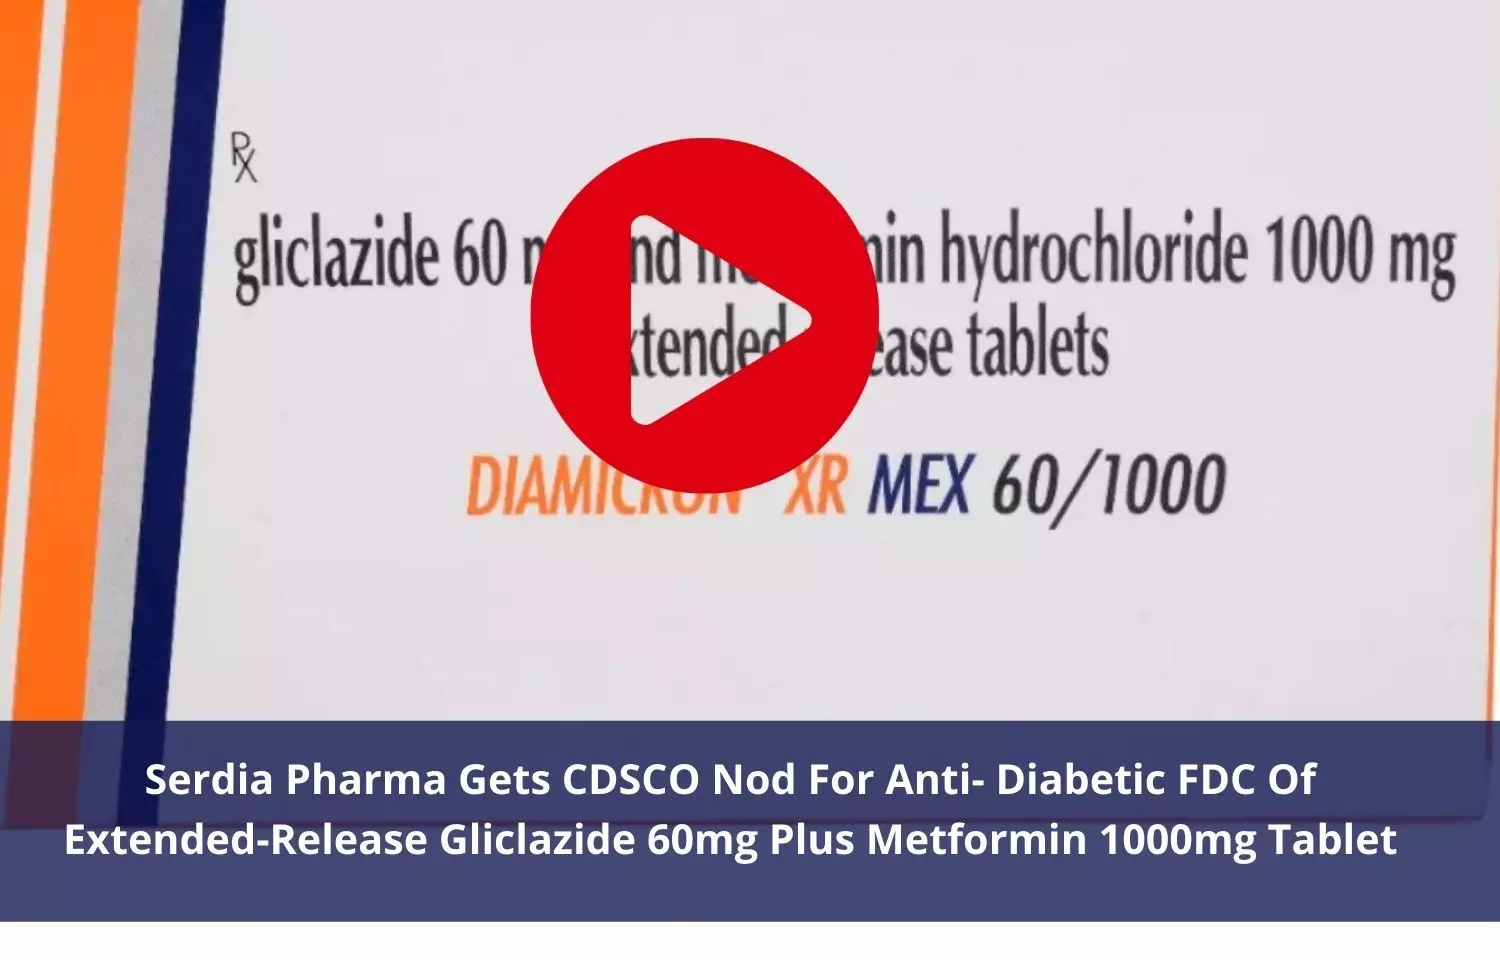 Serdia Pharma bags CDSCO approval for anti-diabetic FDC of extended-release Gliclazide 60mg plus Metformin 1000mg tablet